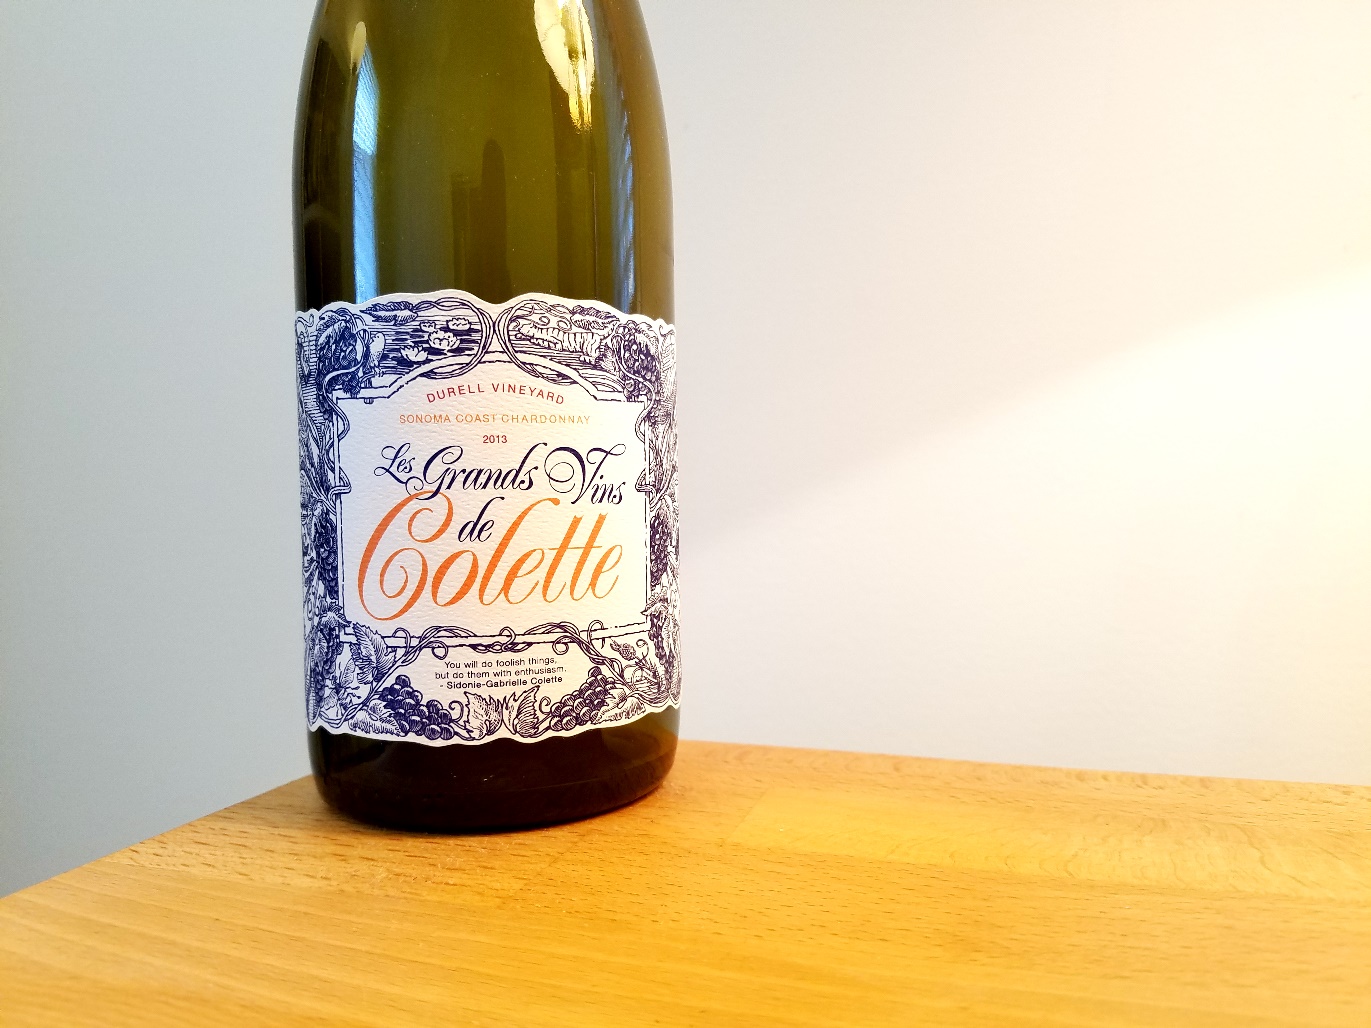 Les Grands Vins de Colette, Chardonnay 2013, Durell Vineyard, Sonoma Coast, California, Wine Casual